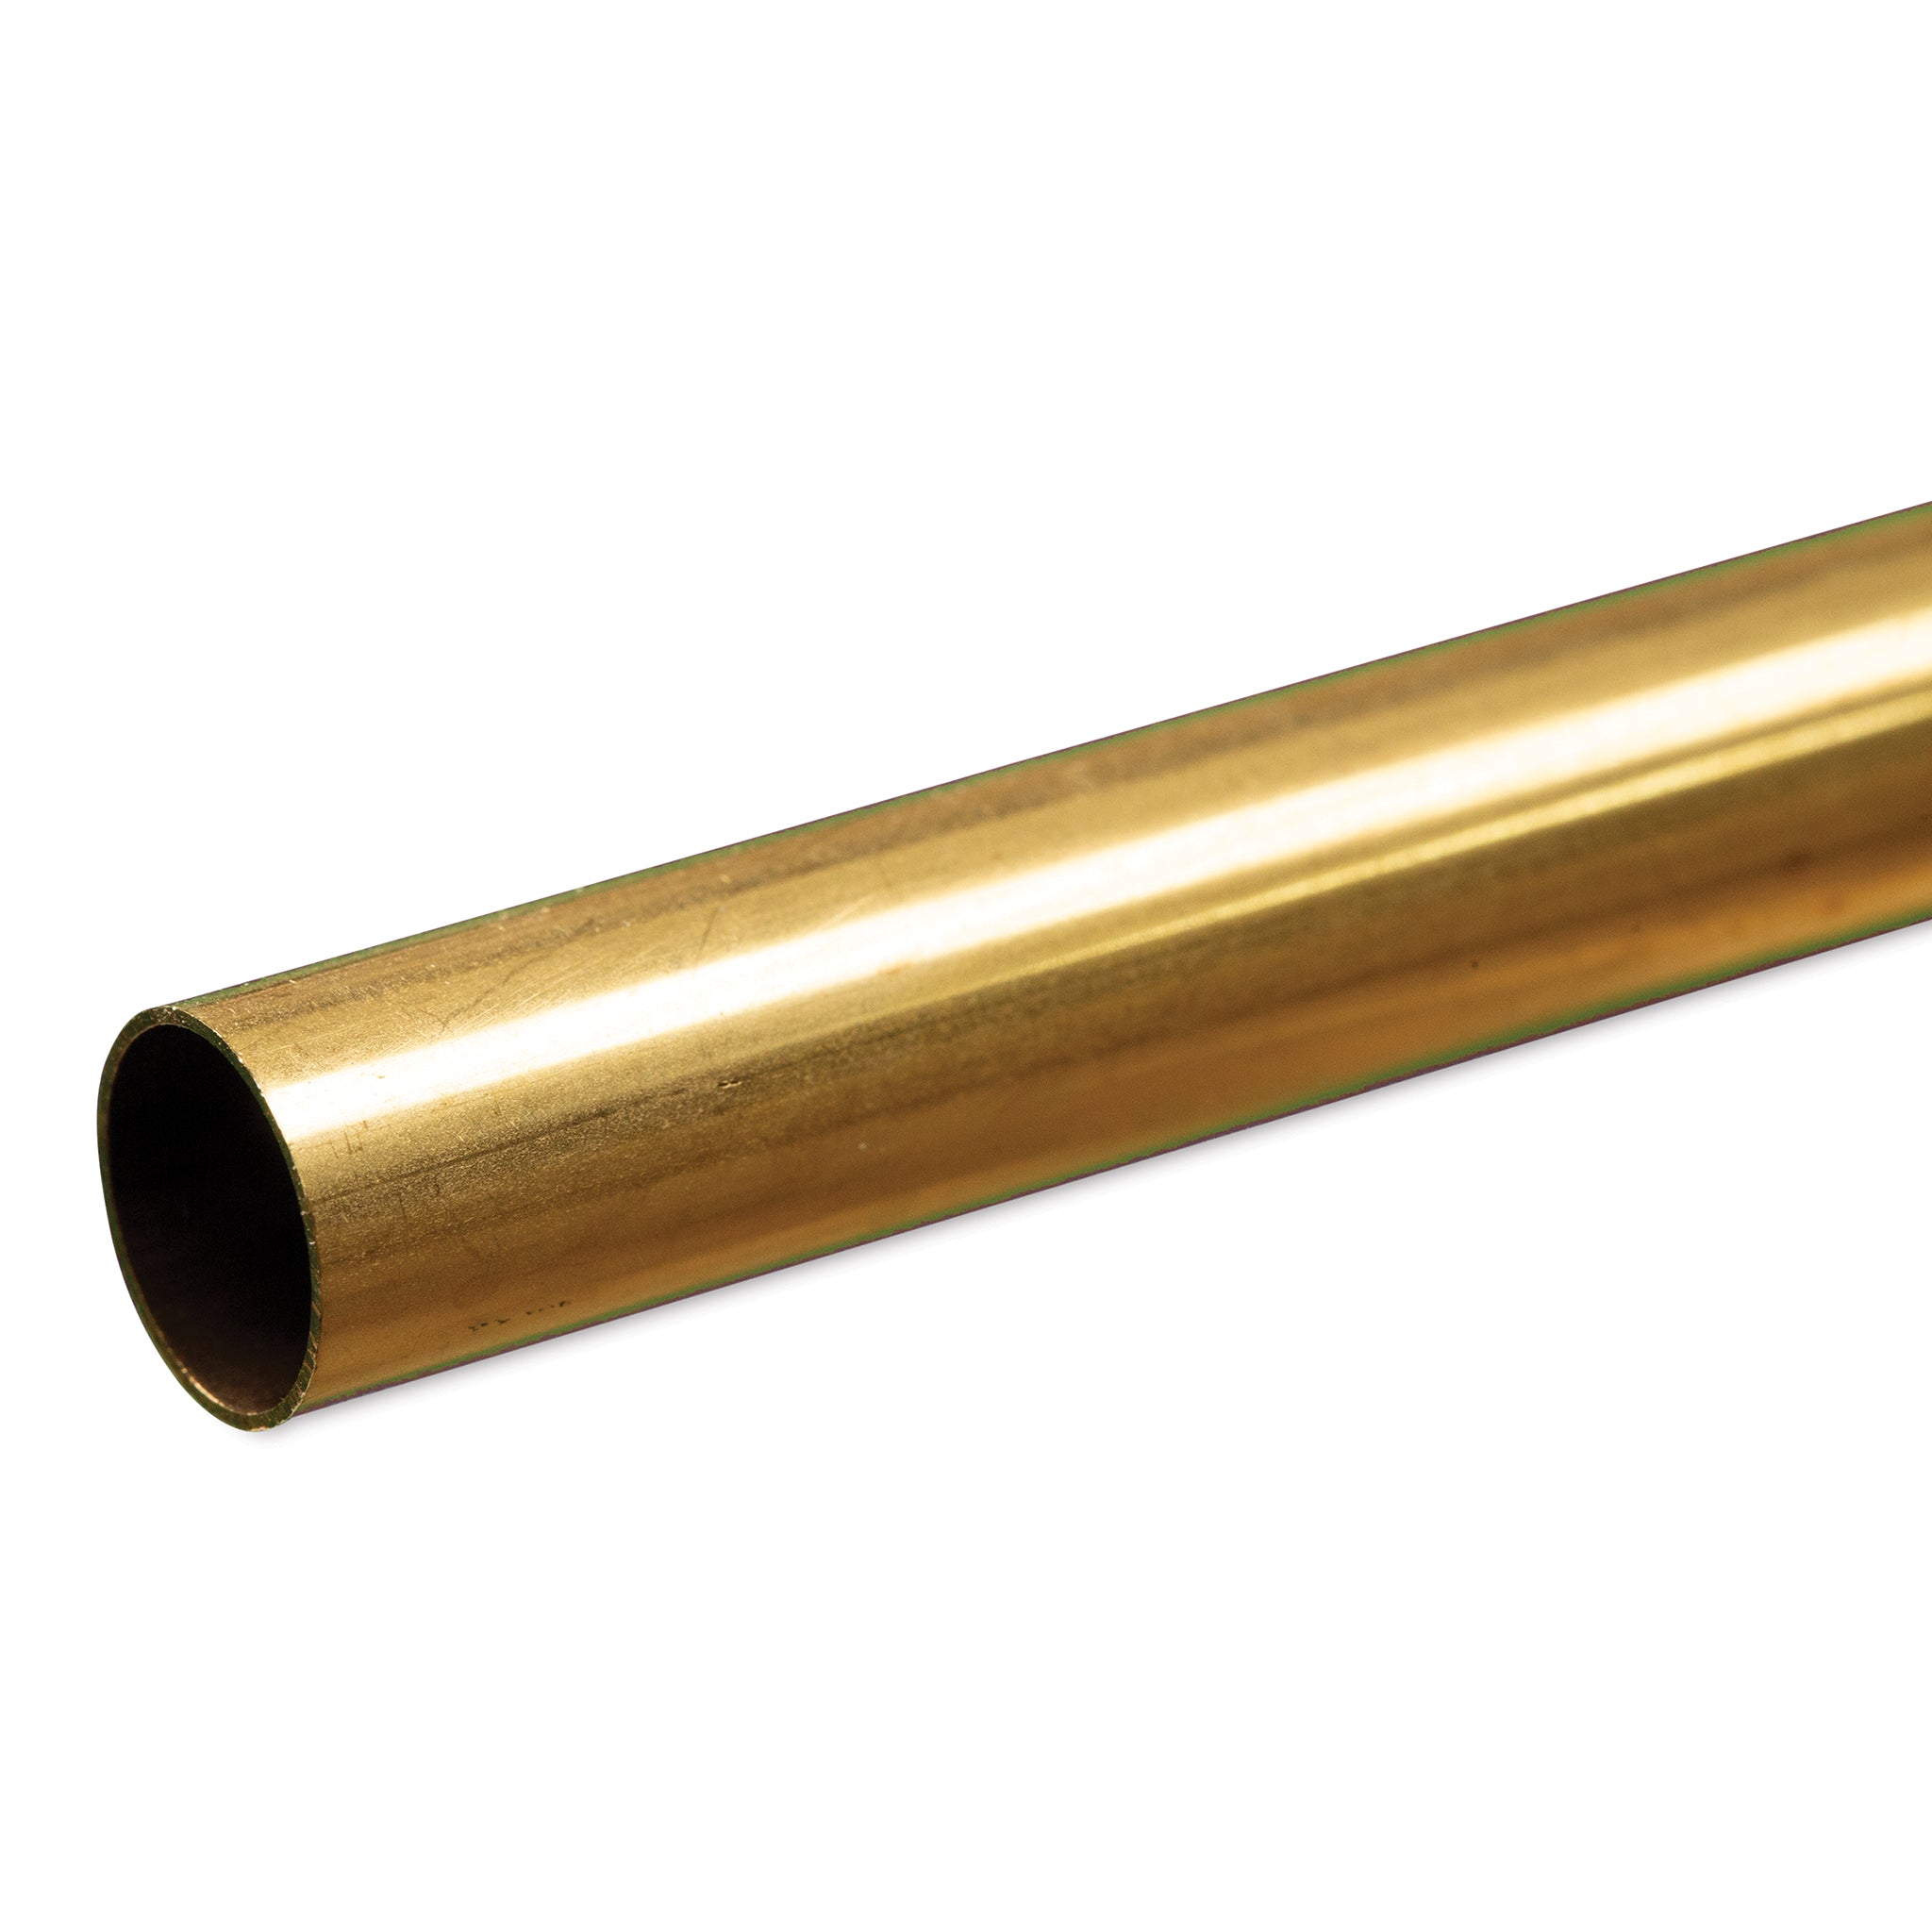 K&S Metals 8133 Round Brass Tube 5/16" OD x 0.014" Wall x 12" Long (1 Piece)